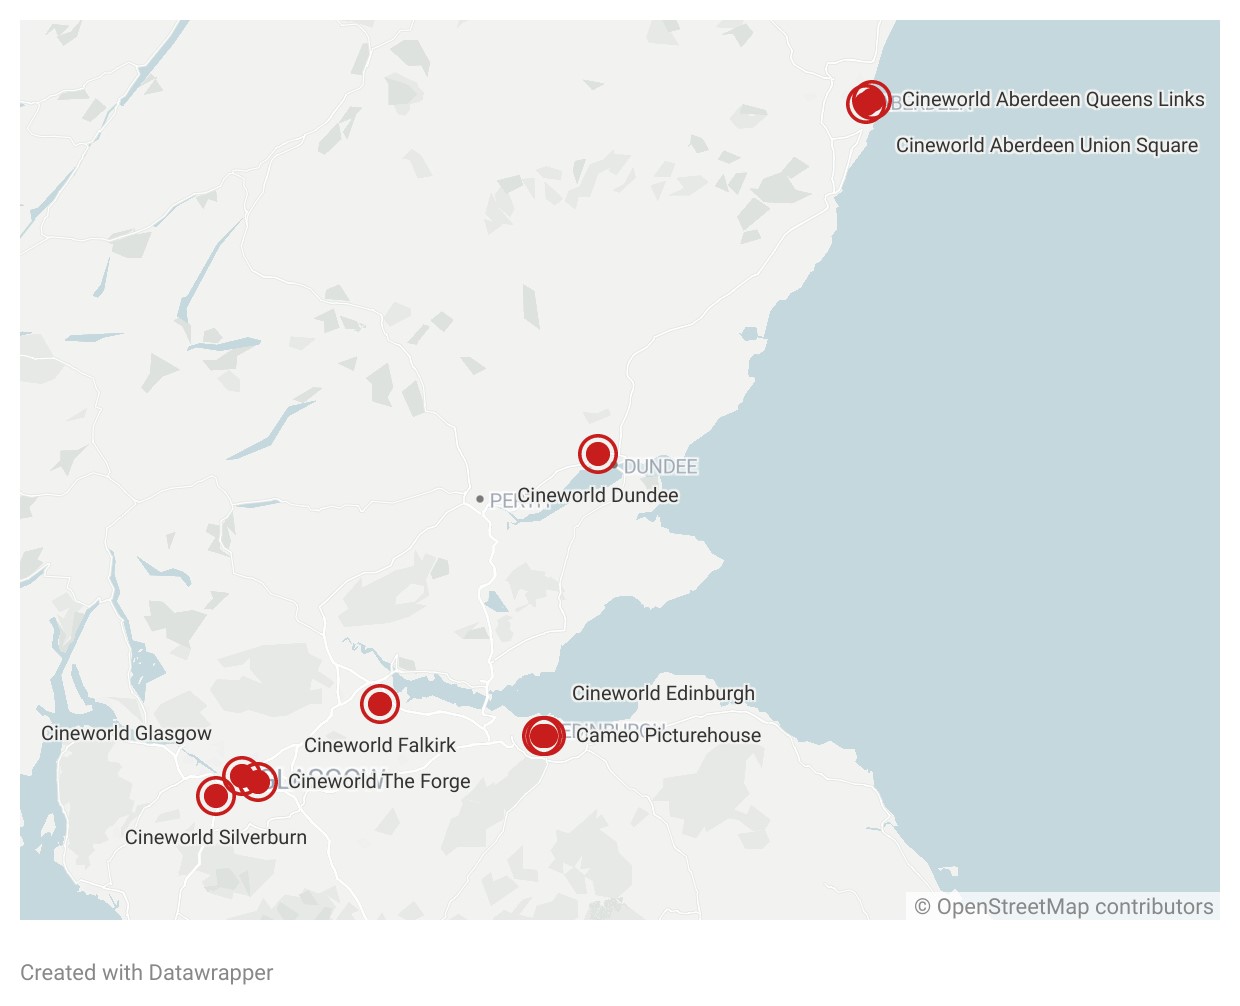 Cineworld locations across Scotland